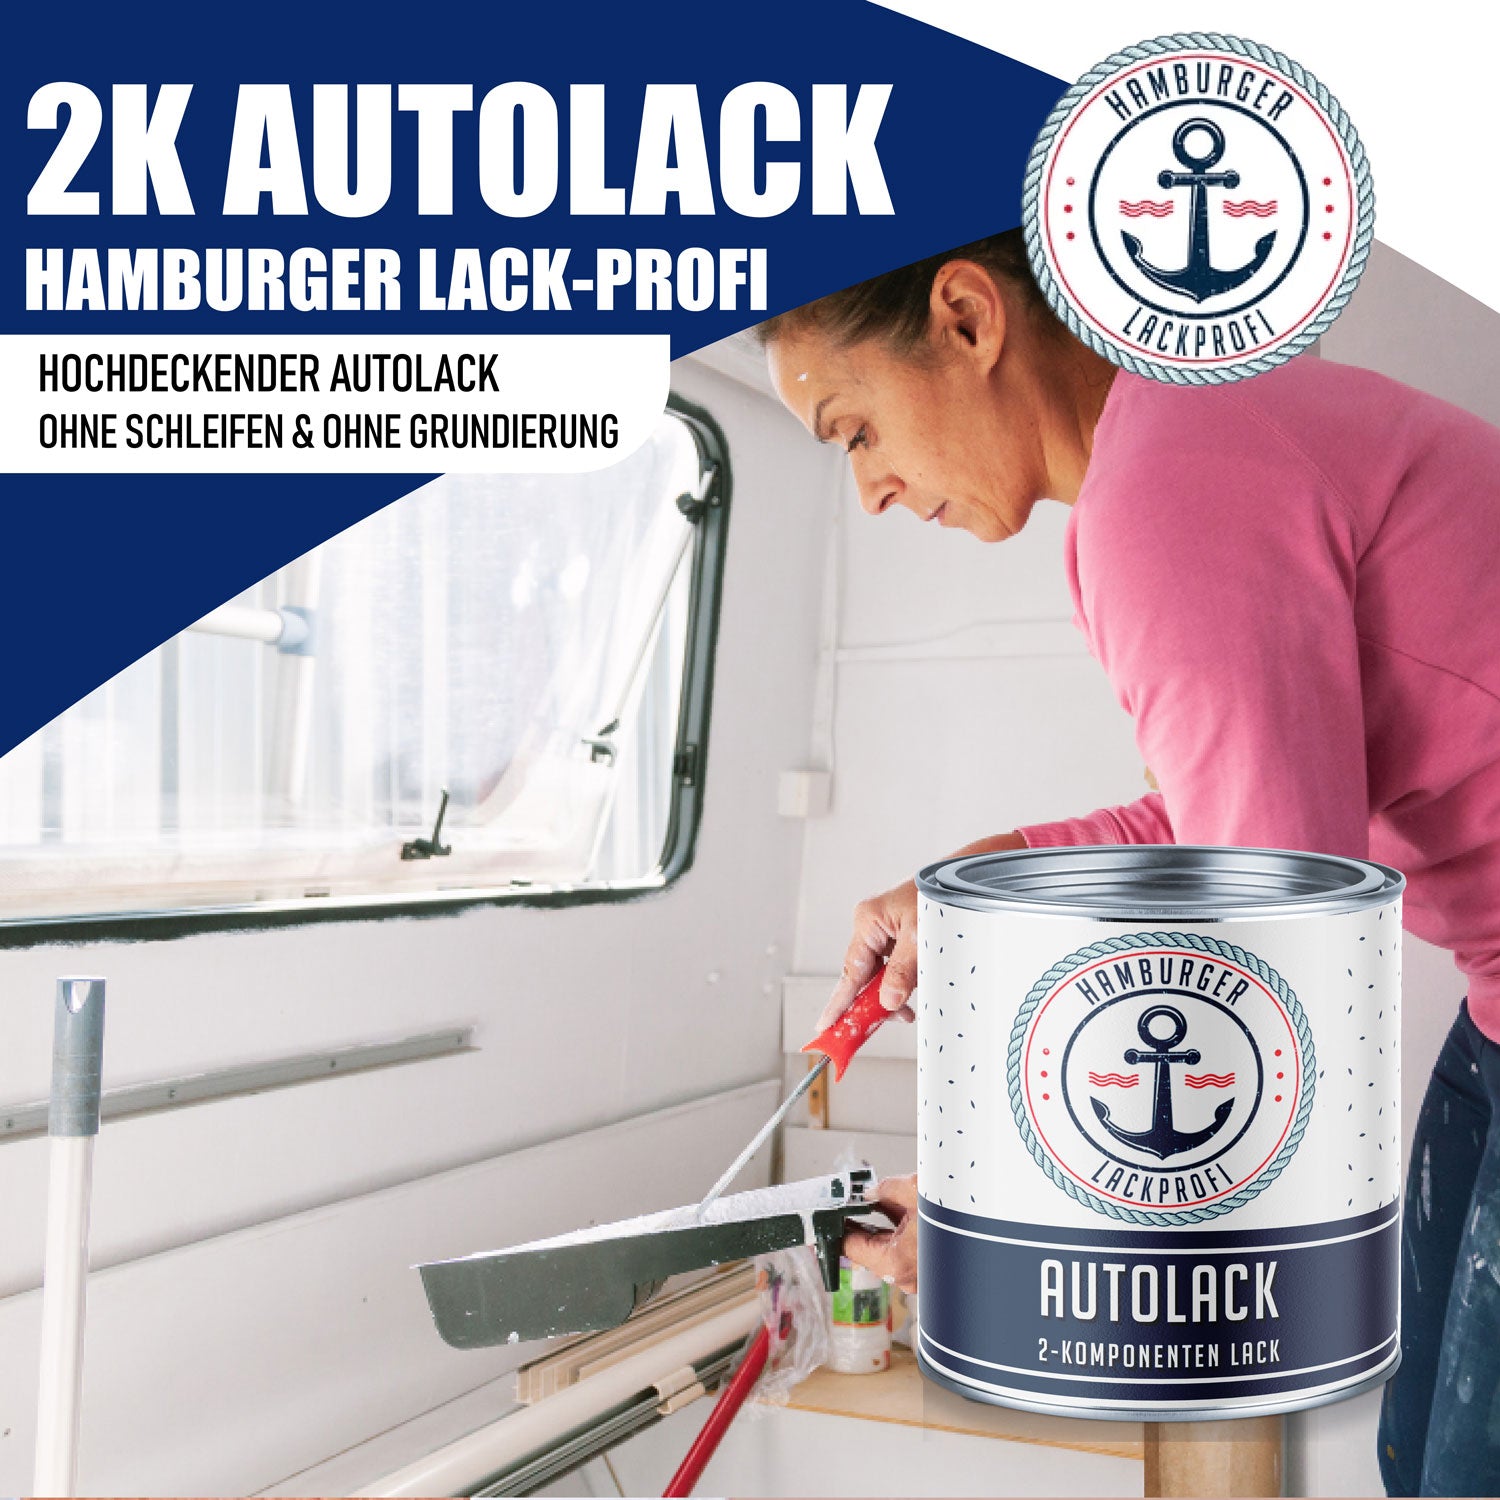 Hamburger Lack-Profi 2K Autolack in Fehgrau RAL 7000 mit Lackierset (X300) & Verdünnung (1 L) - 30% Sparangebot